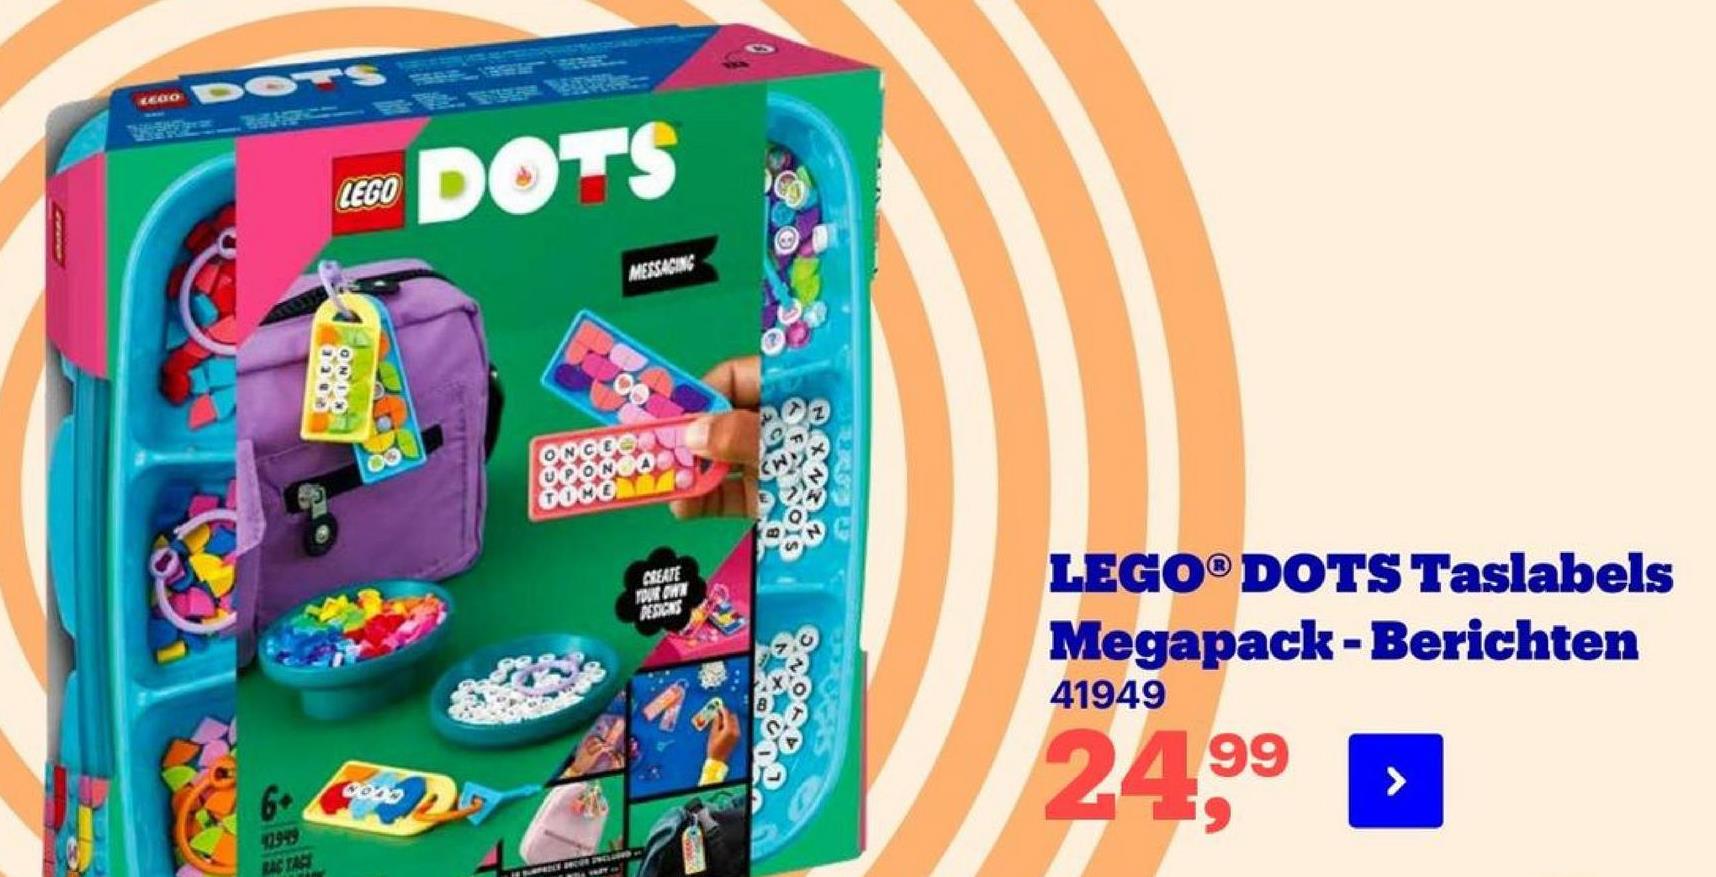 DOTS
EEBO
1280 DOTS
LEGO
MESSAGING
AREATE
PONT
ASA
LEGO® DOTS Taslabels
Megapack - Berichten
41949
*o0o
24,99
von
>
19
4199
LASI
We
